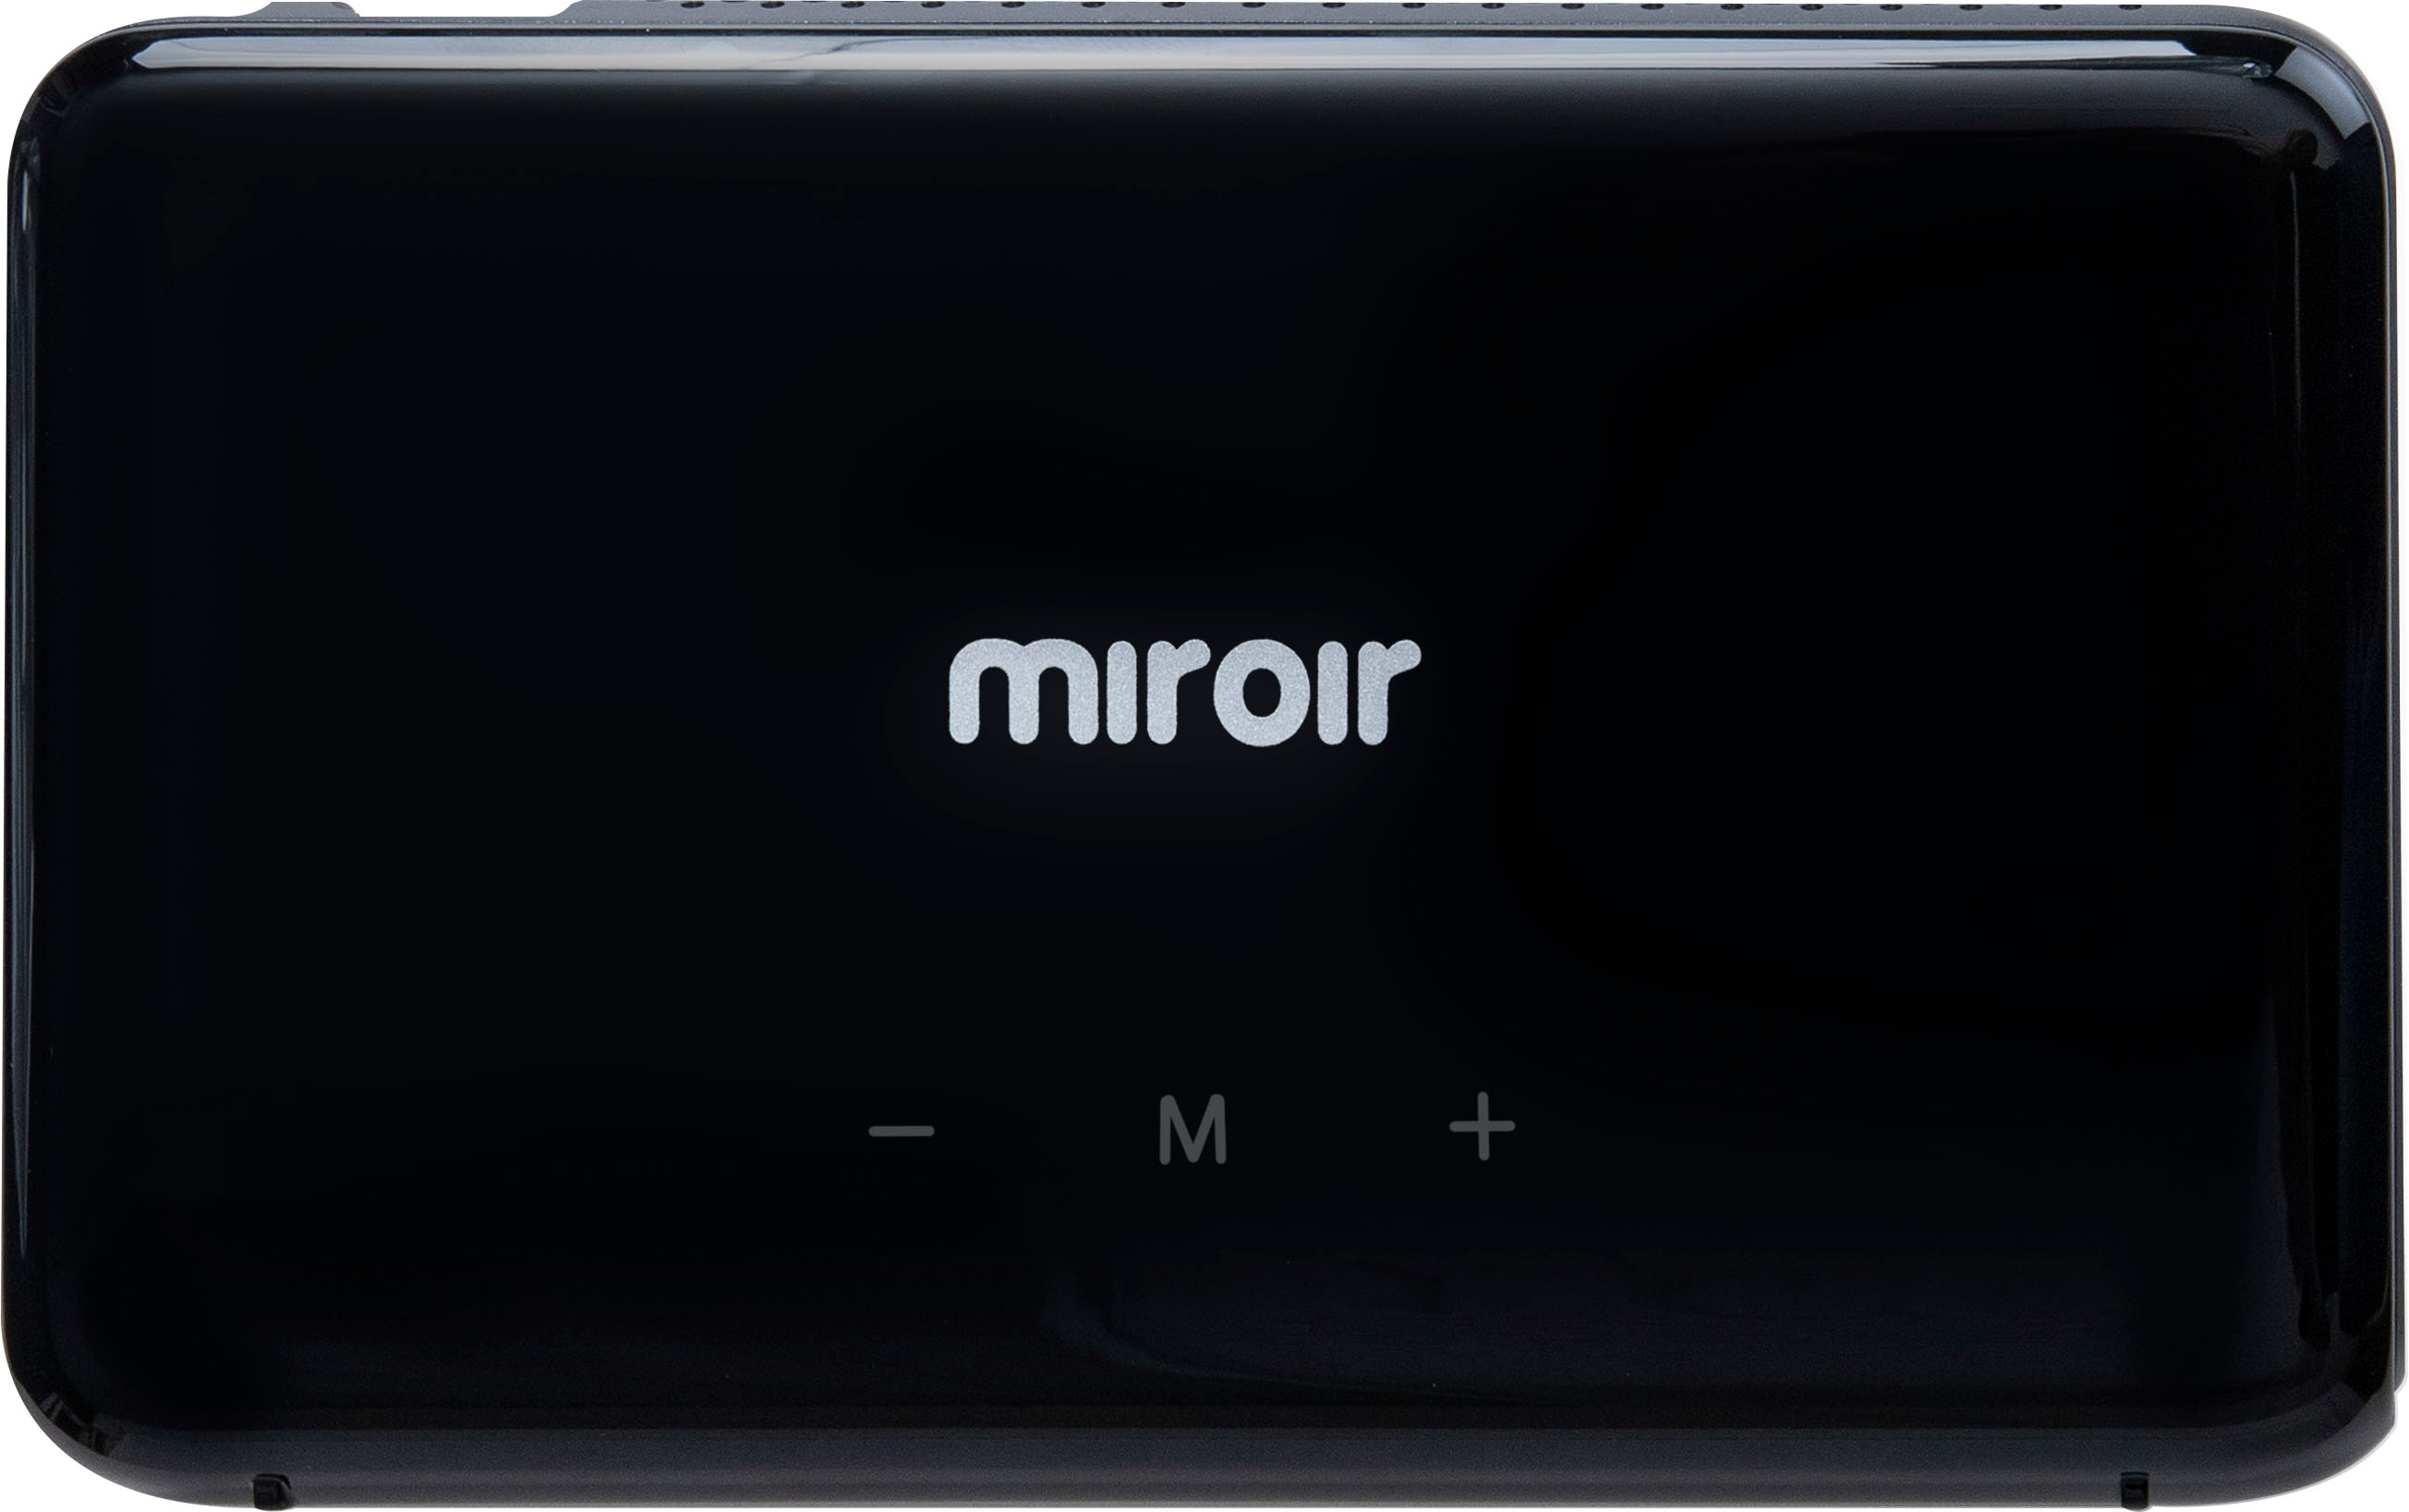 Miroir - M190 Mini Pro Projector - Black